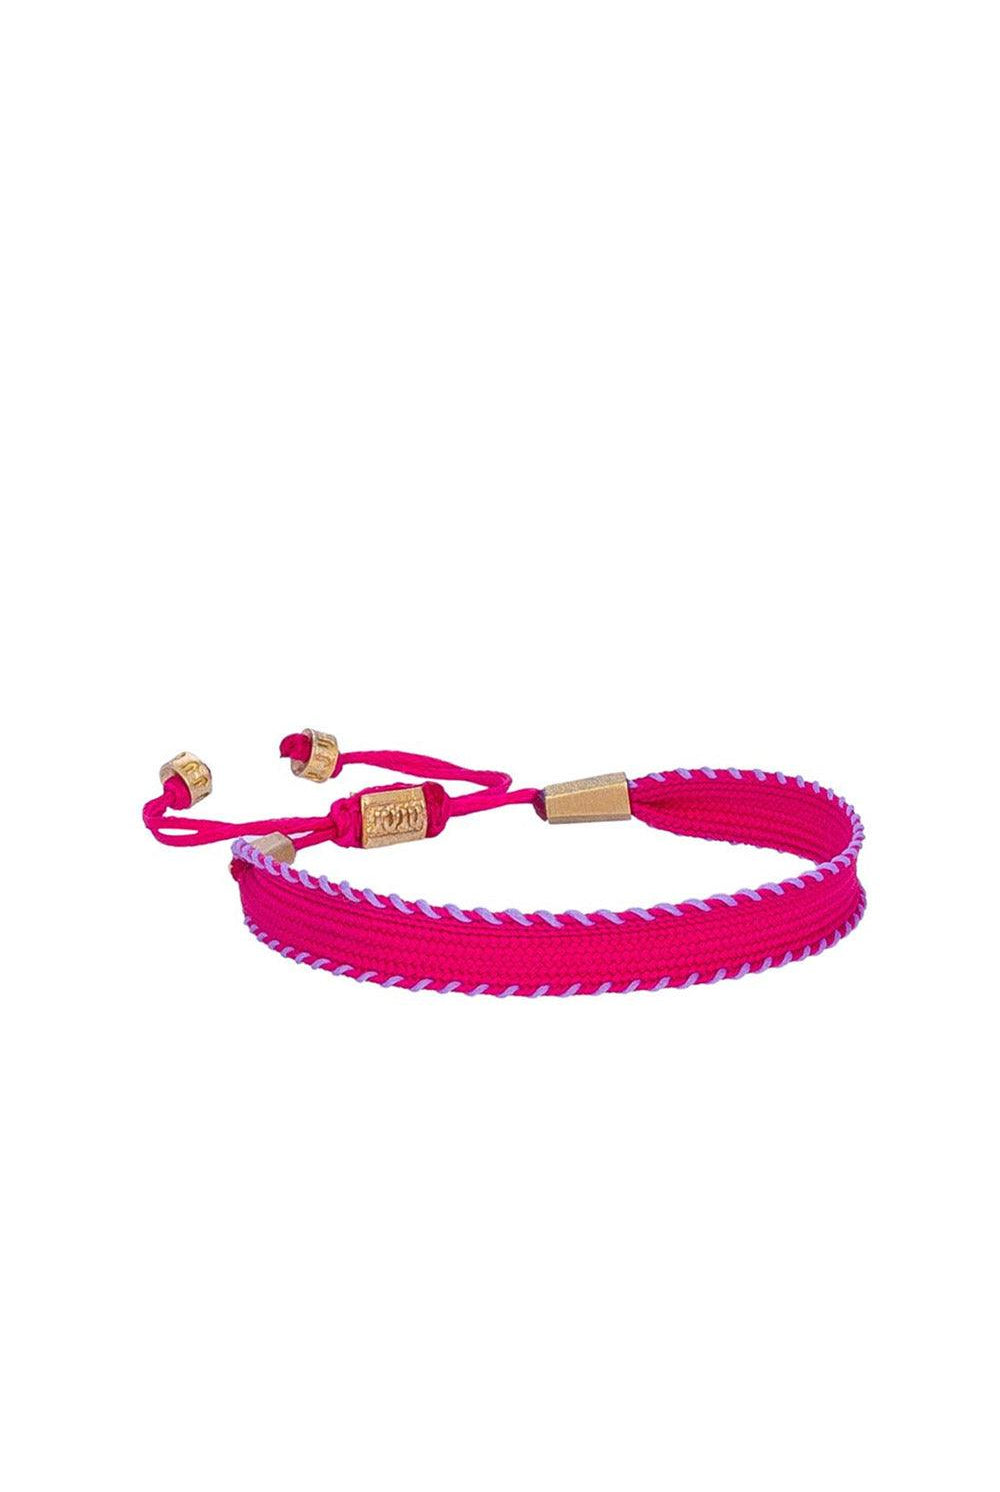 JUJU | Coloured Rope Bracelet CCI-1012 1 | Milagron